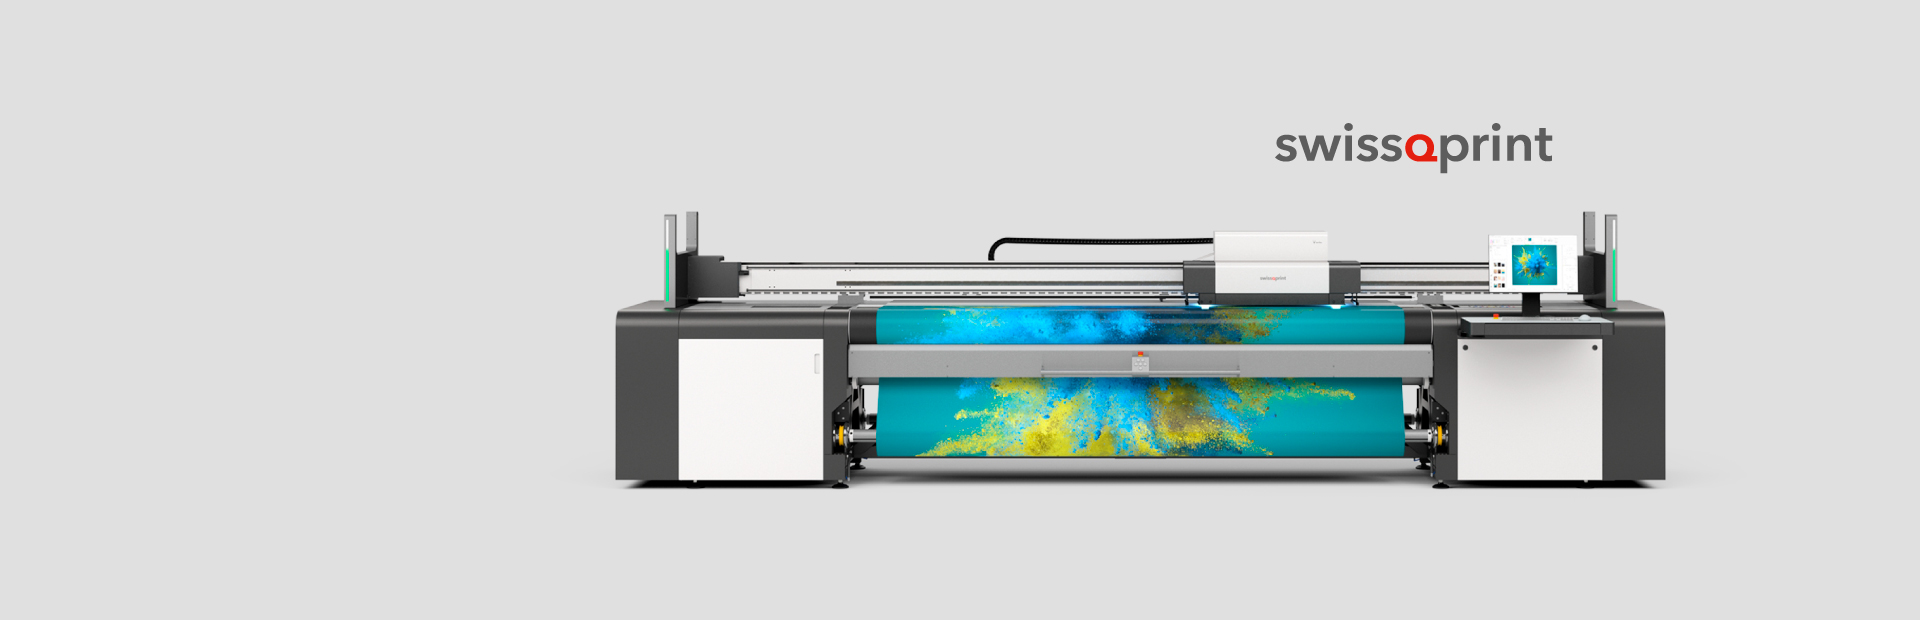 SwissQprint Karibu 2 printer roll to roll UV elvețian la 3,2 m de mare productivitate, eficiență, fiabilitate